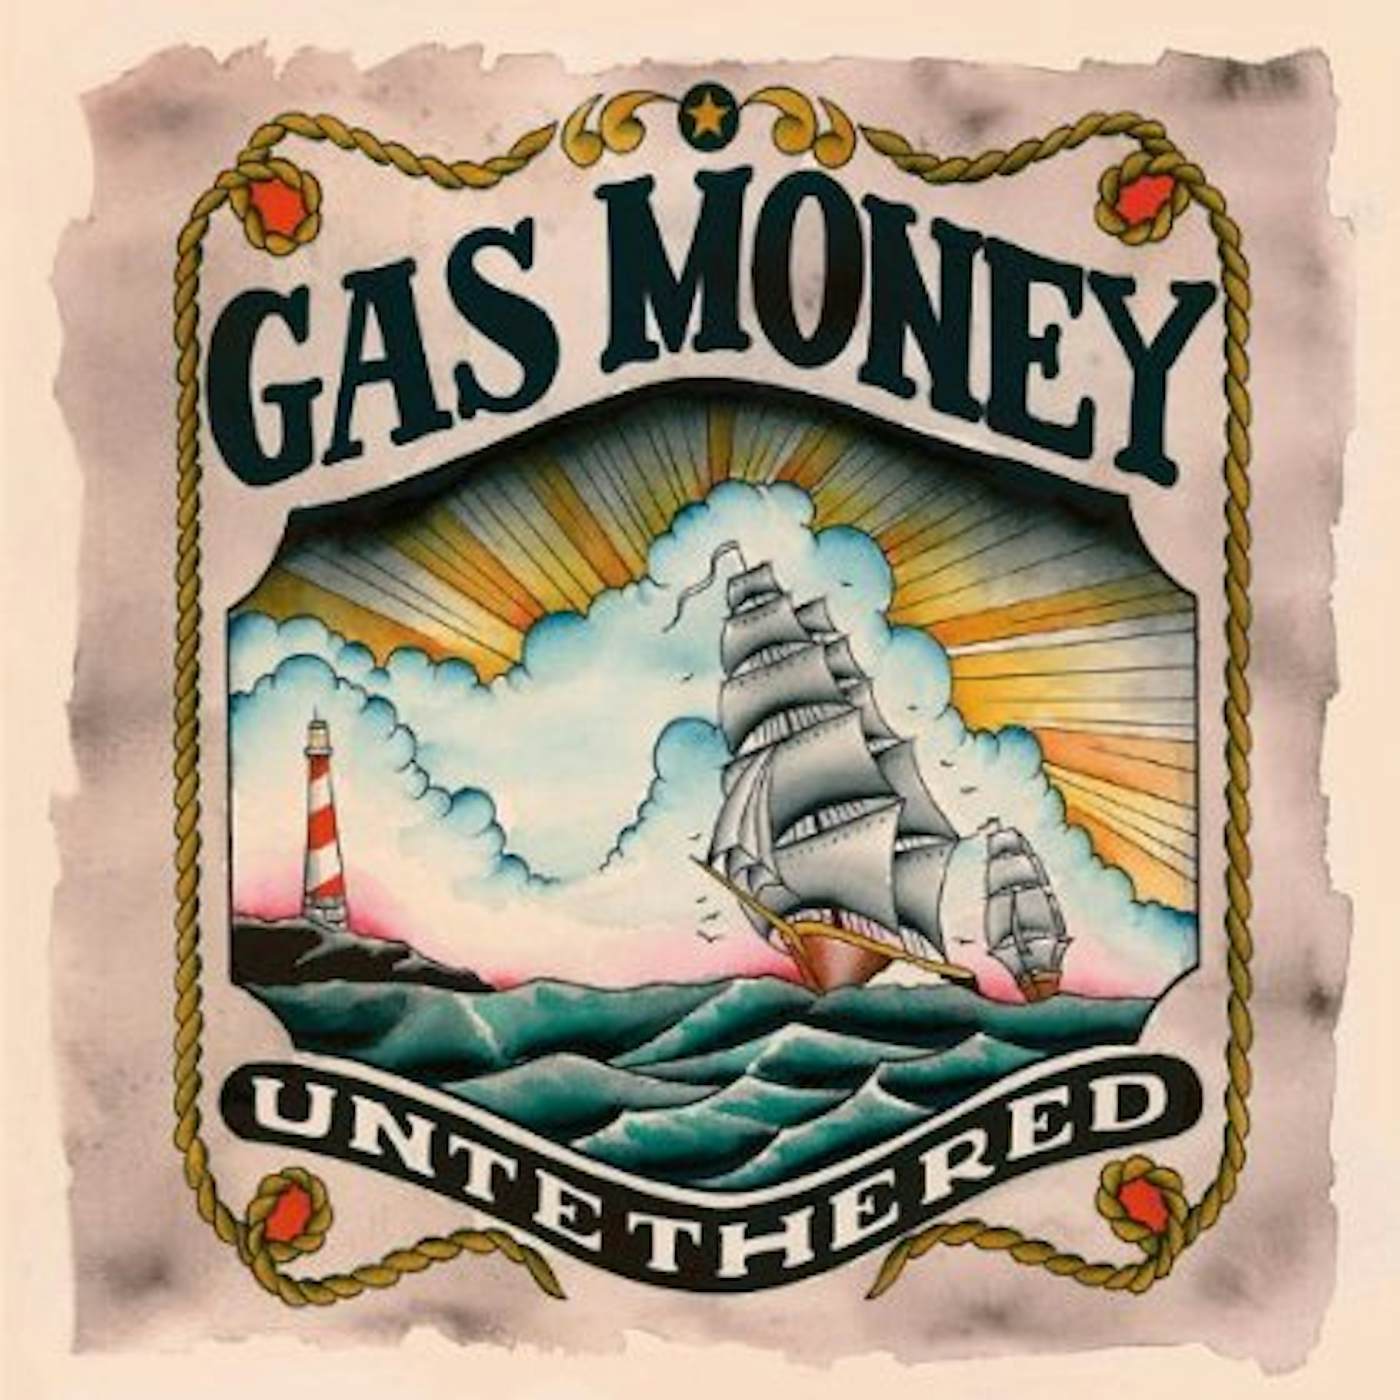 Gas Money UNTETHERED CD